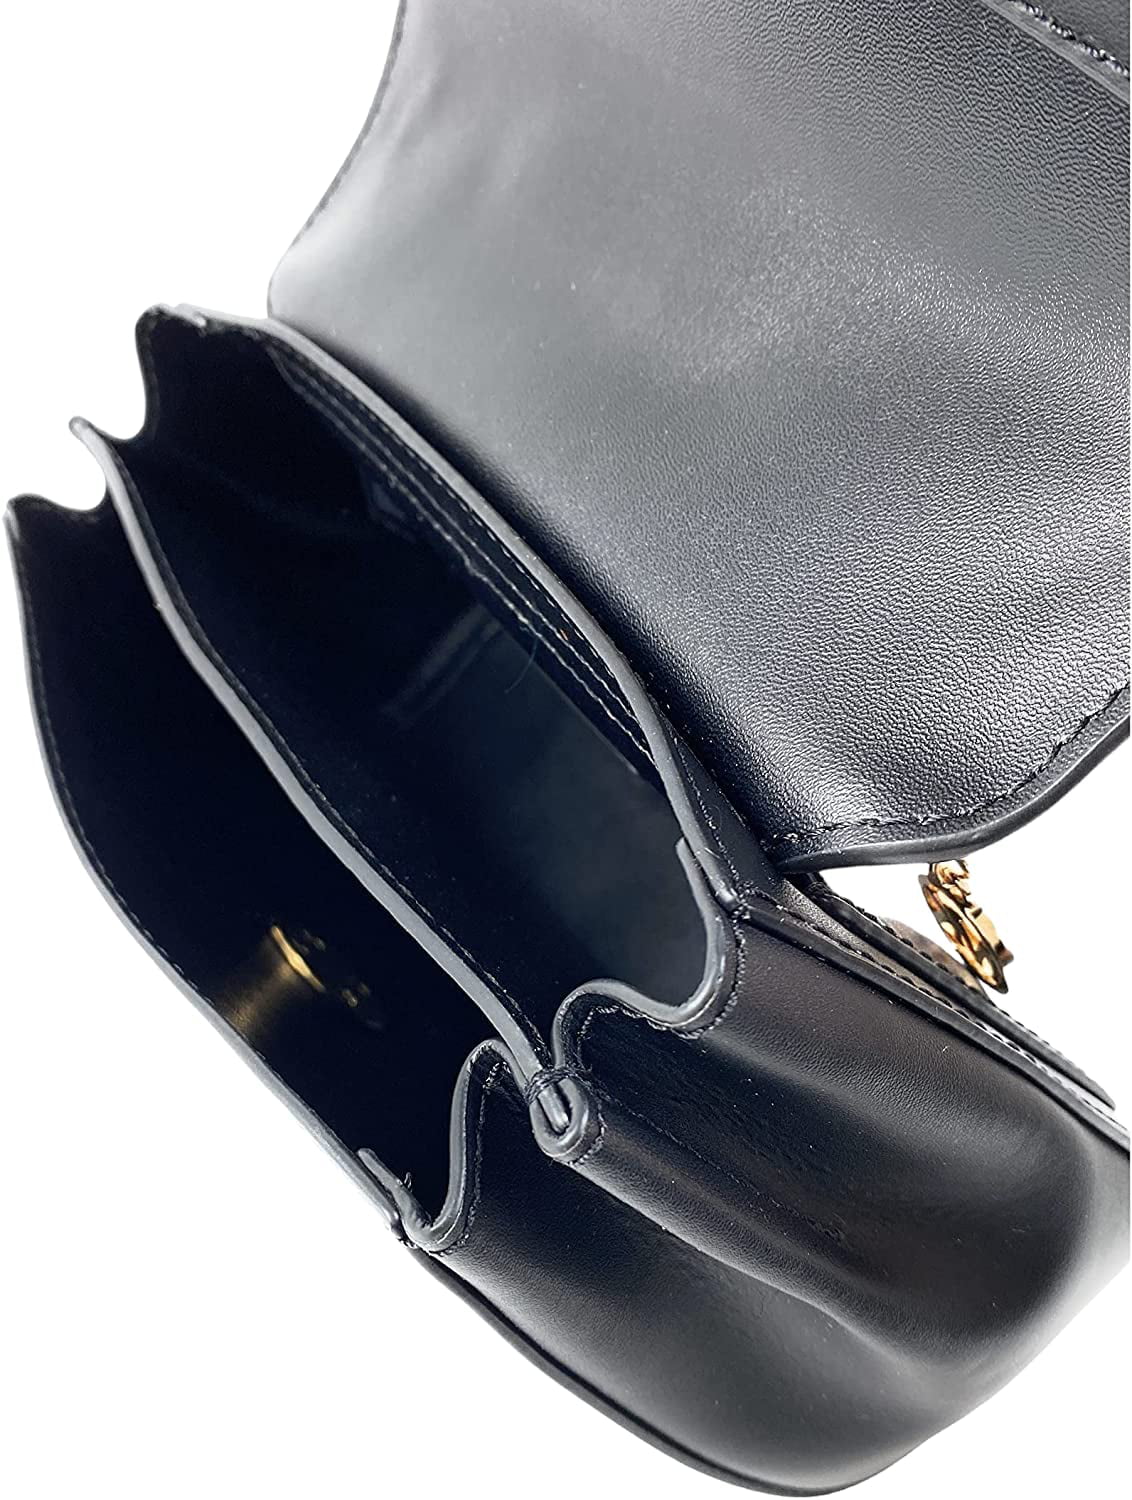 Leather crossbody bag Michael Kors Black in Leather - 25082979